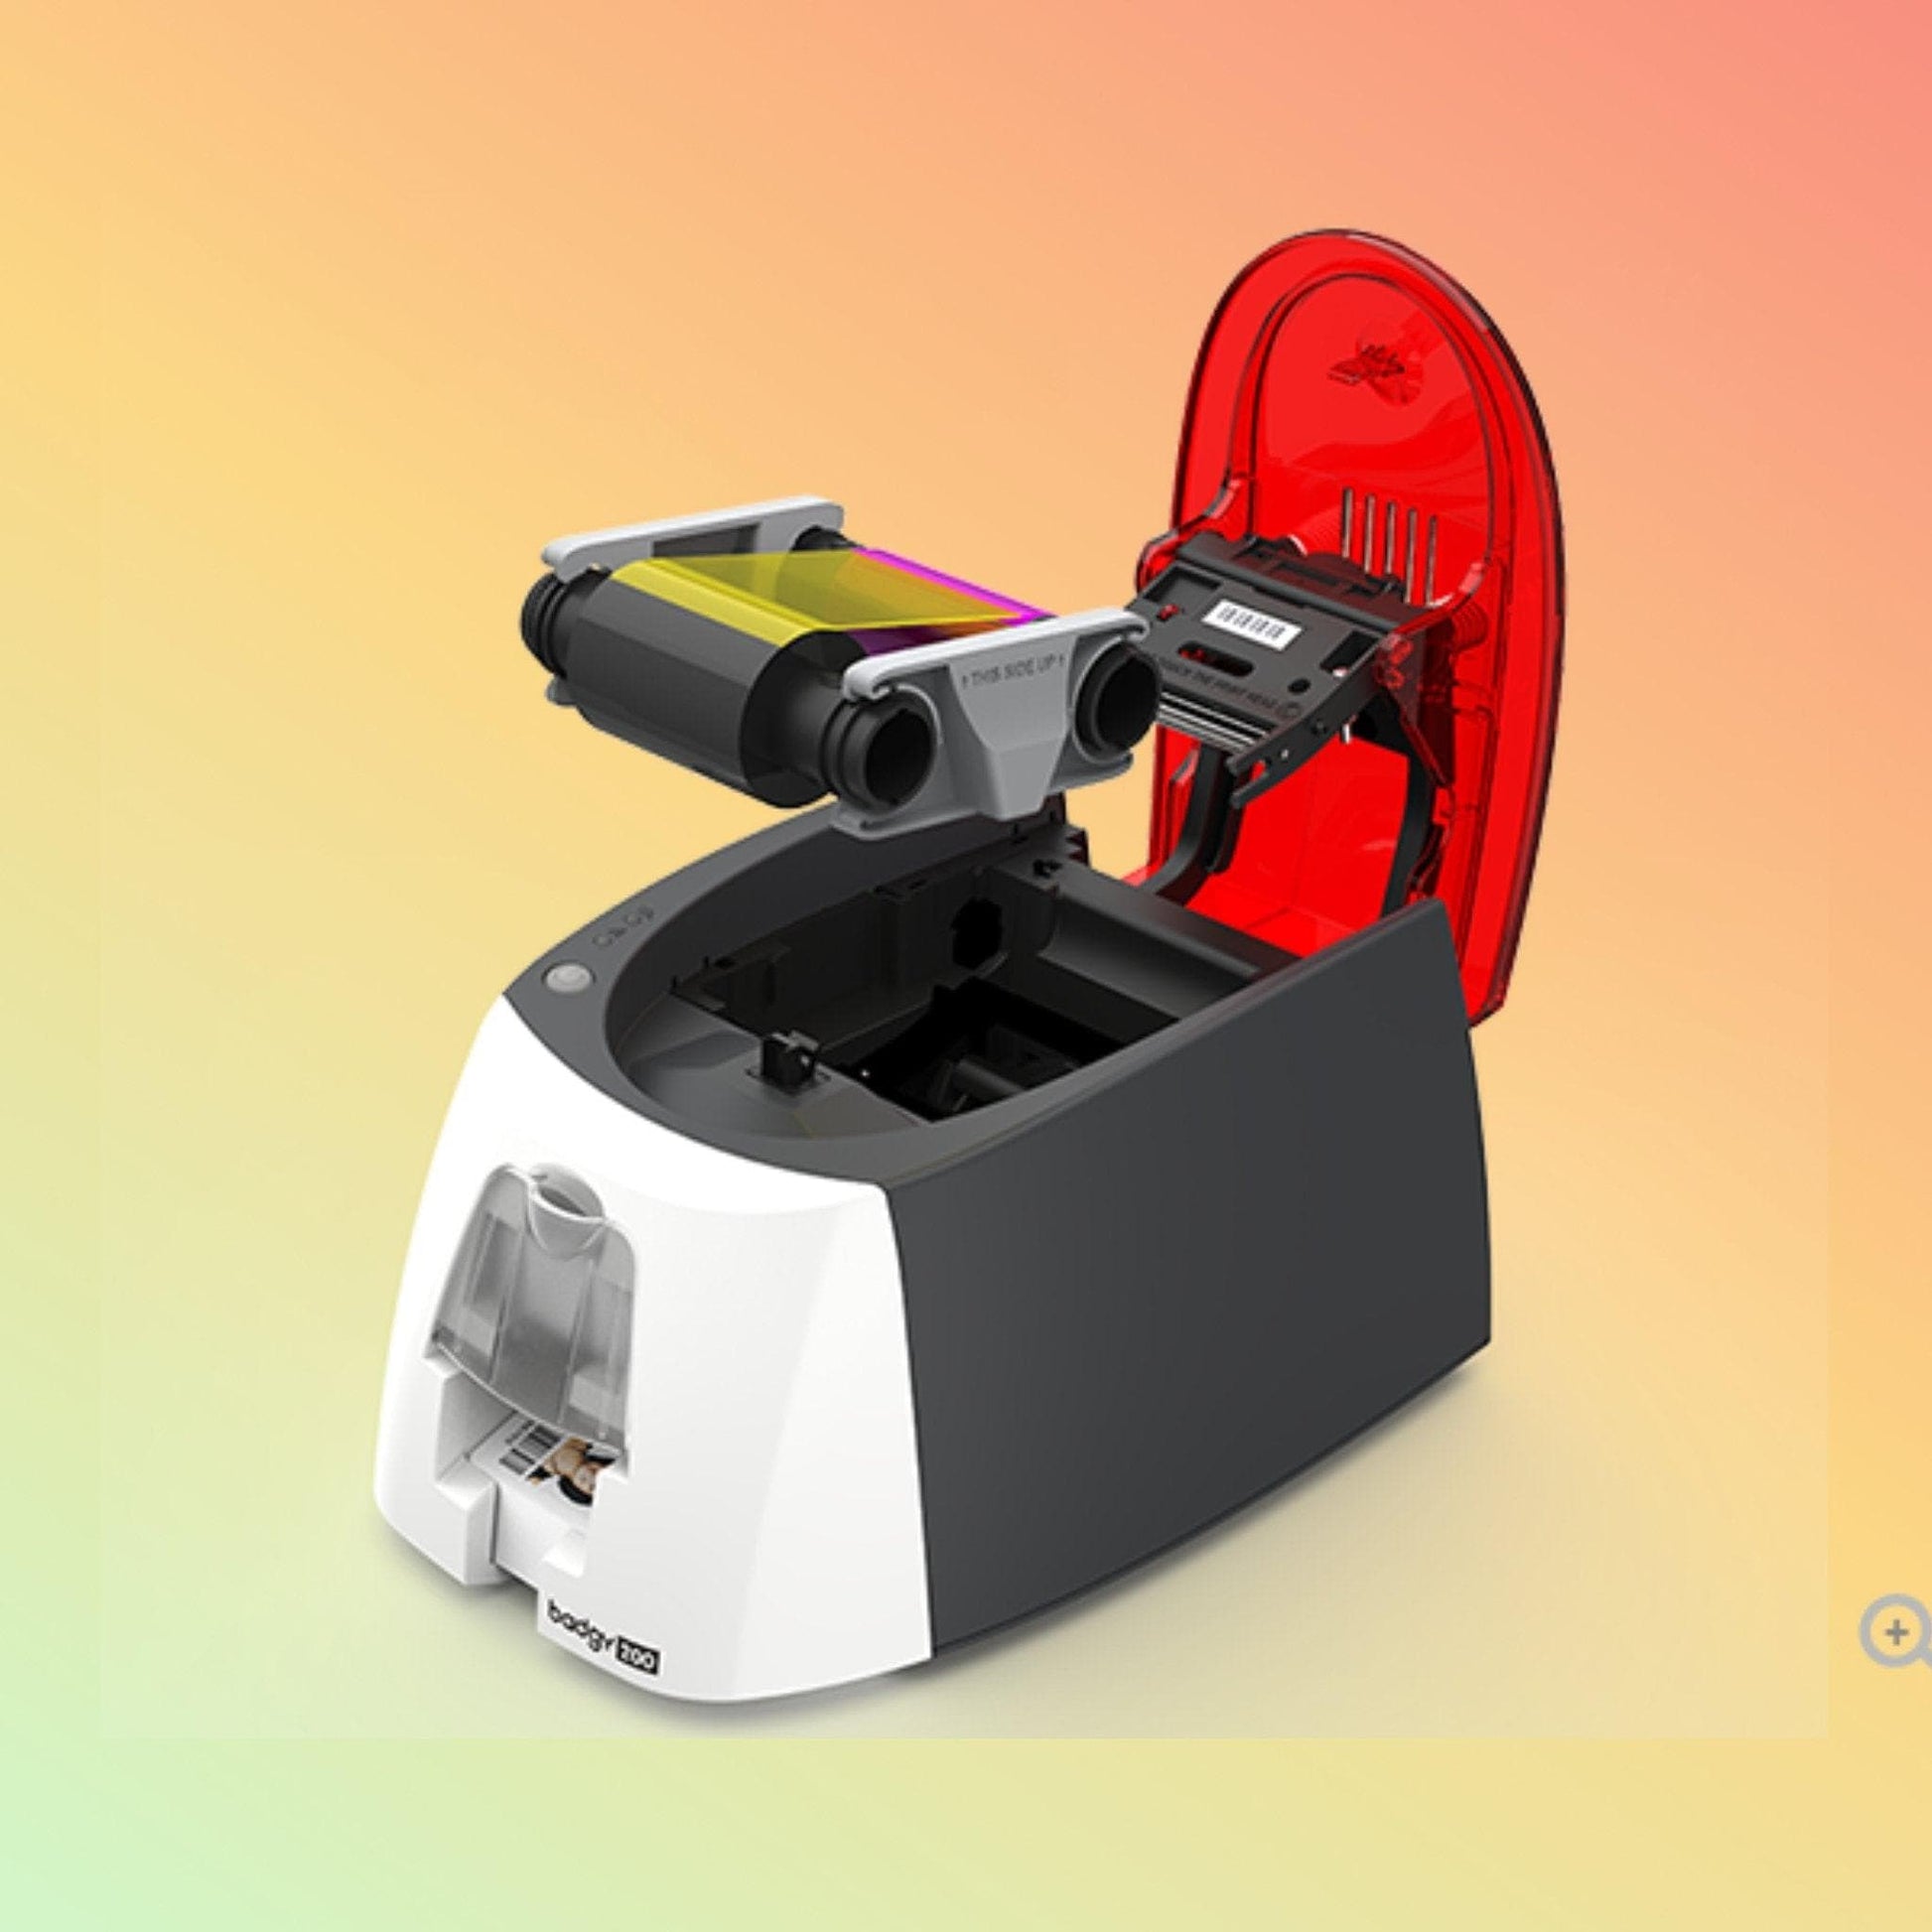 Idcard Printer - Evolis Badgy 200 Printer USB-B22U0000RS - Neotech